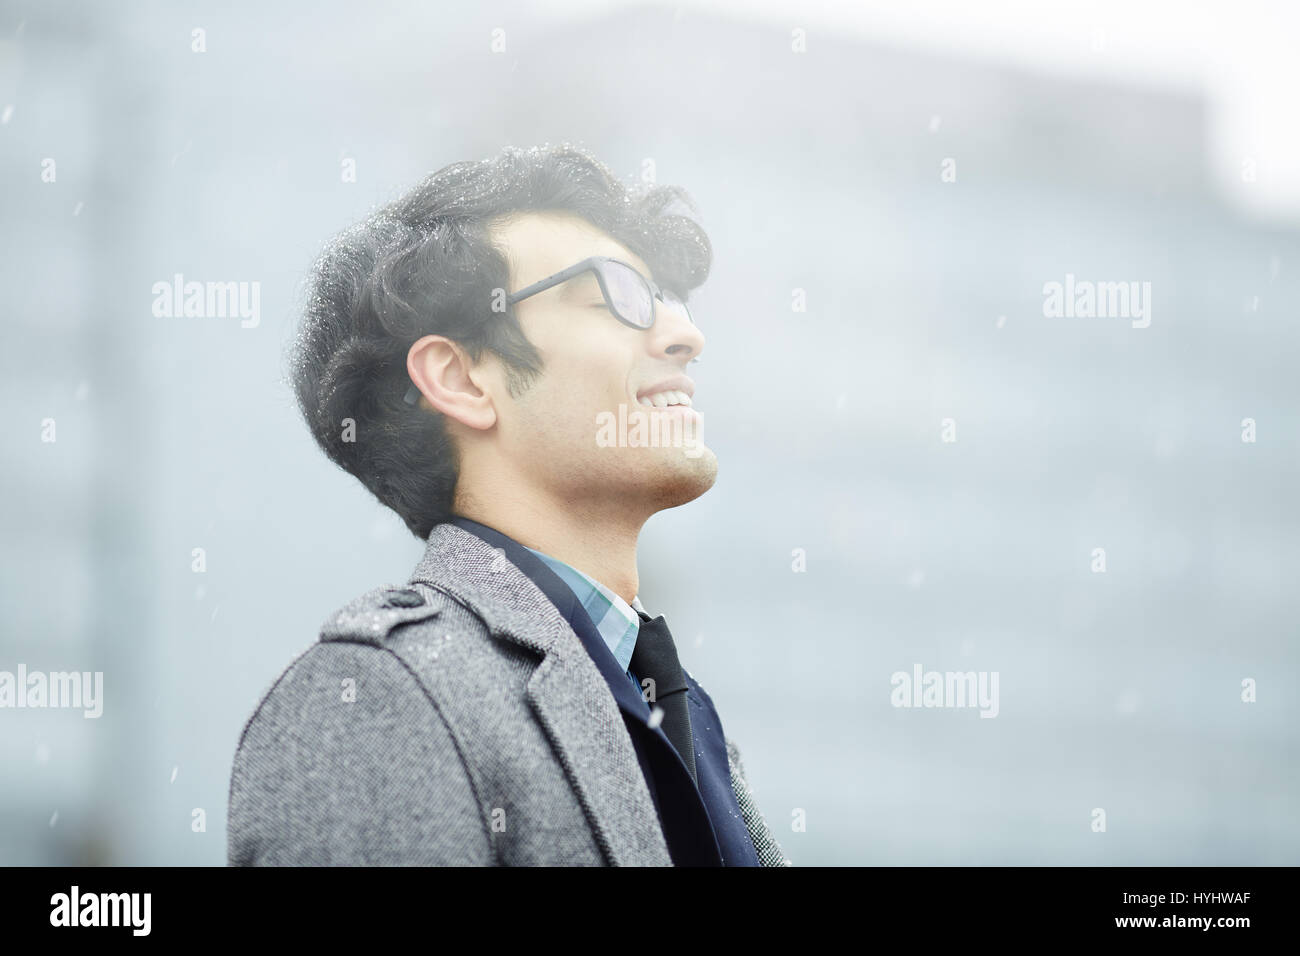 Middle-Eastern Man Enjoying Snow Stock Photo